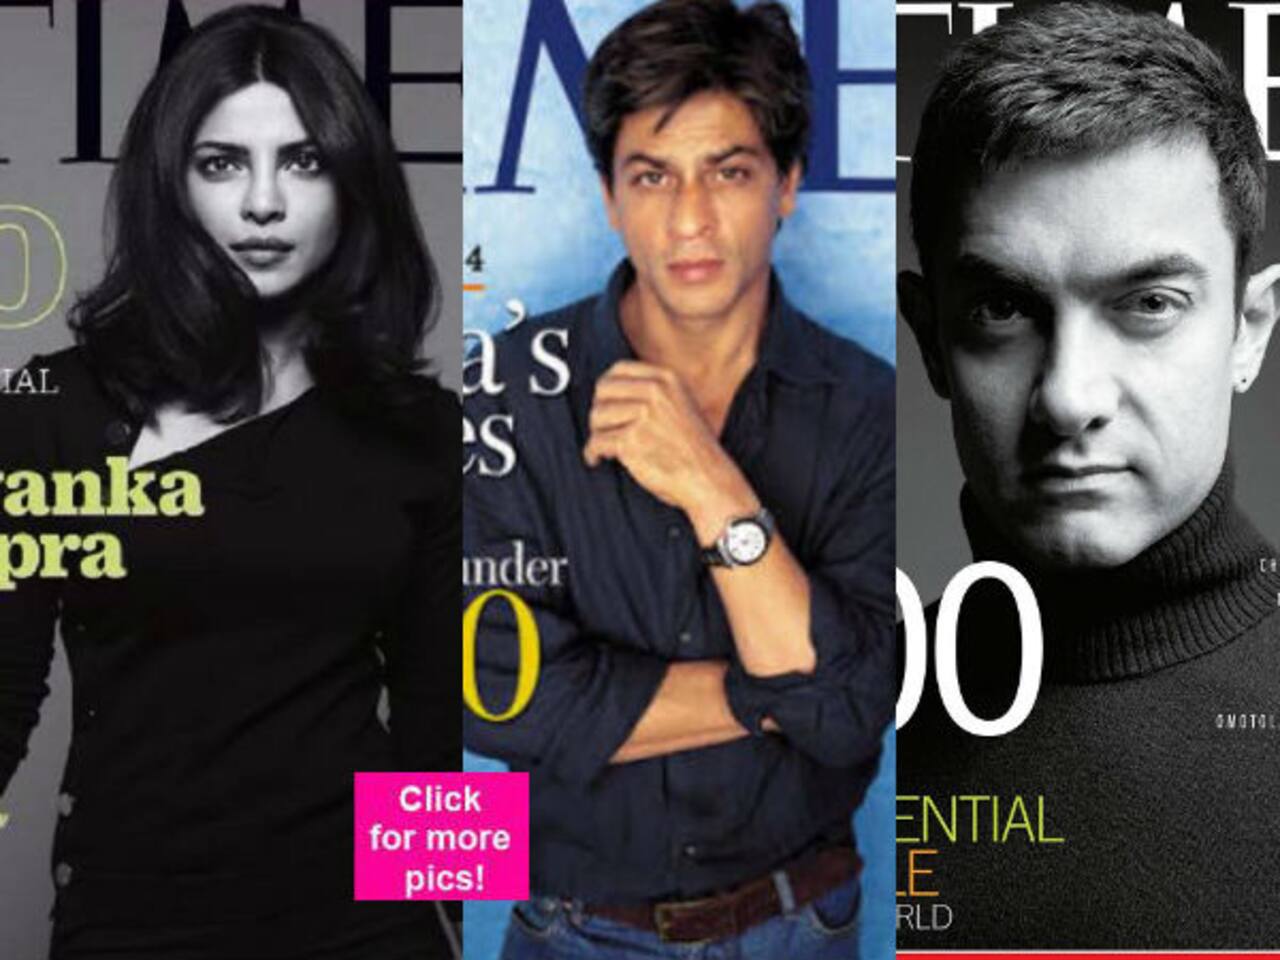 Shah Rukh Khan, Aamir Khan, Priyanka Chopra, Aishwarya Rai Bachchan - Actors who OWNED the TIME magazine covers like a BOSS!